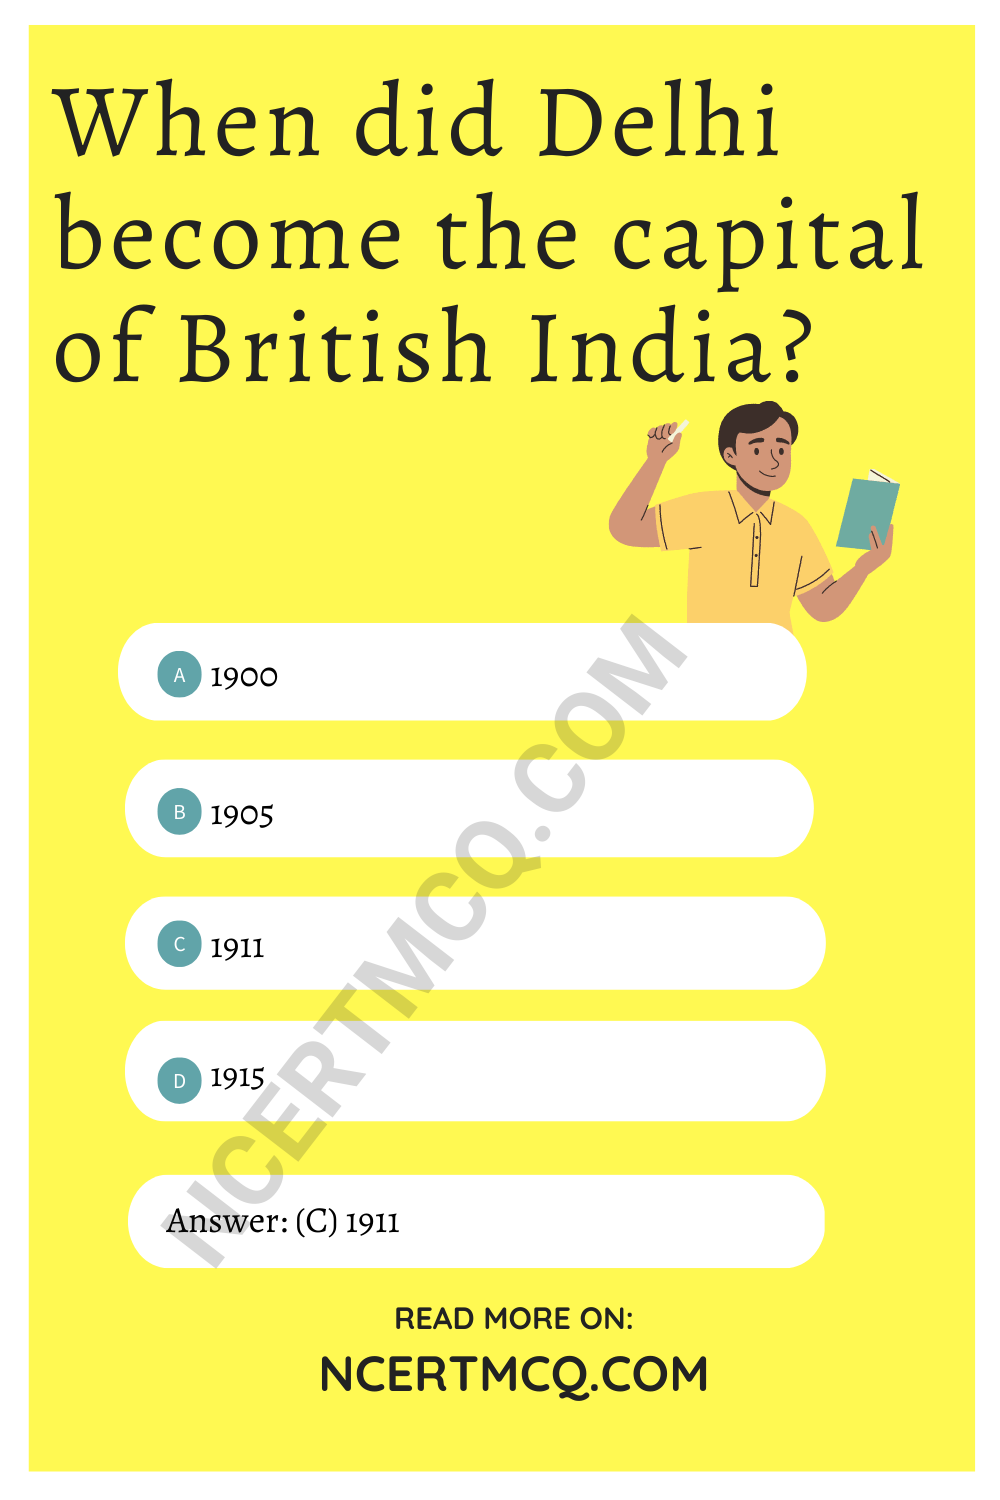 When did Delhi become the capital of British India?